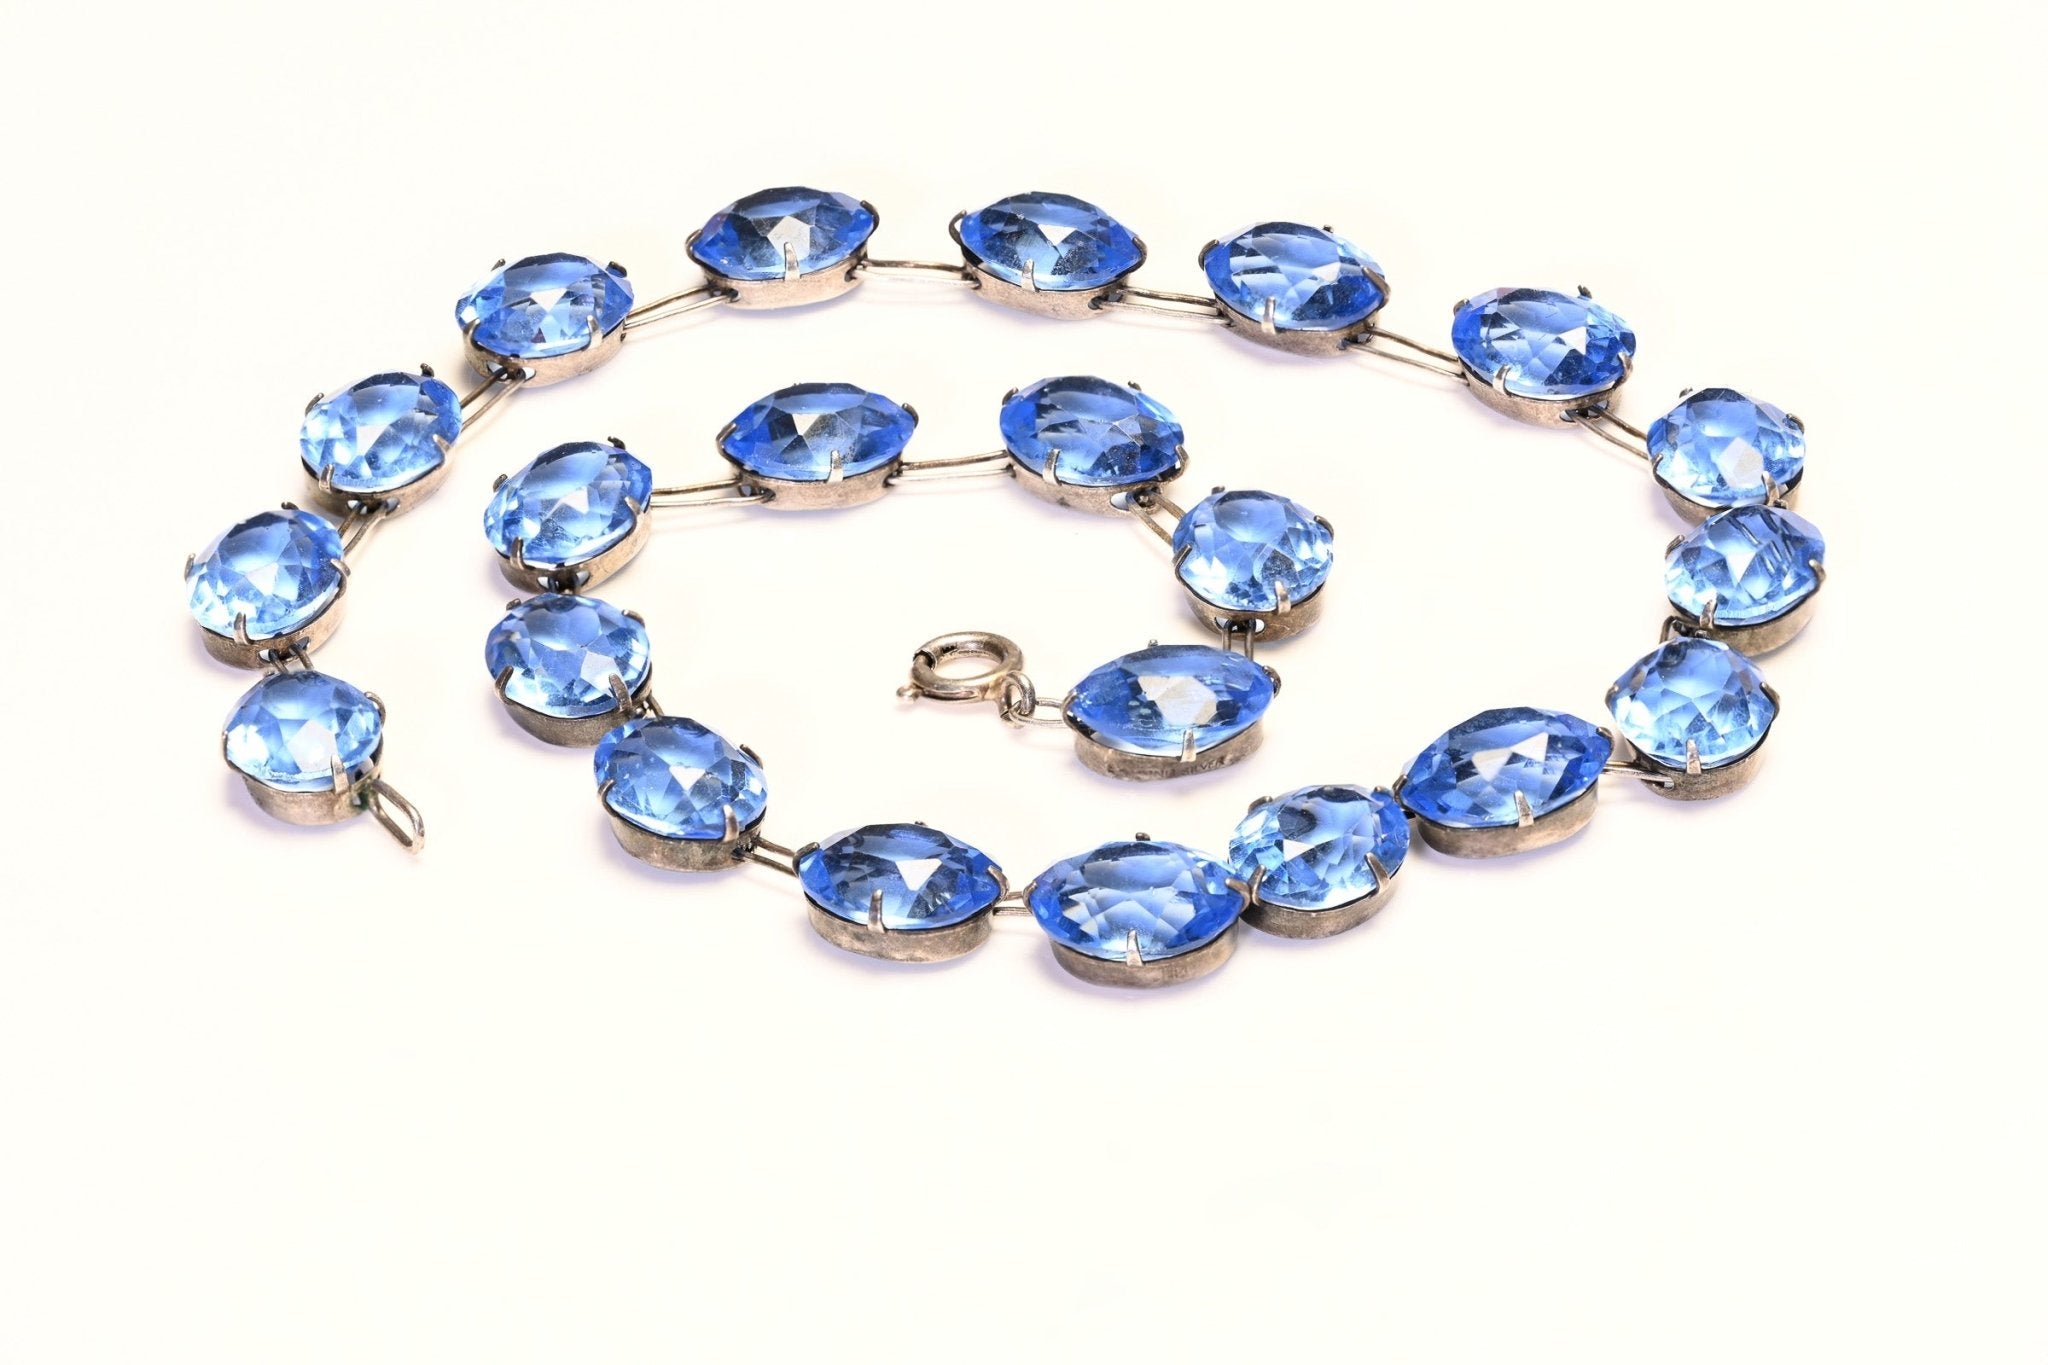 Vintage 1930’s Art Deco Sterling Silver Blue Paste Riviere Chain Necklace